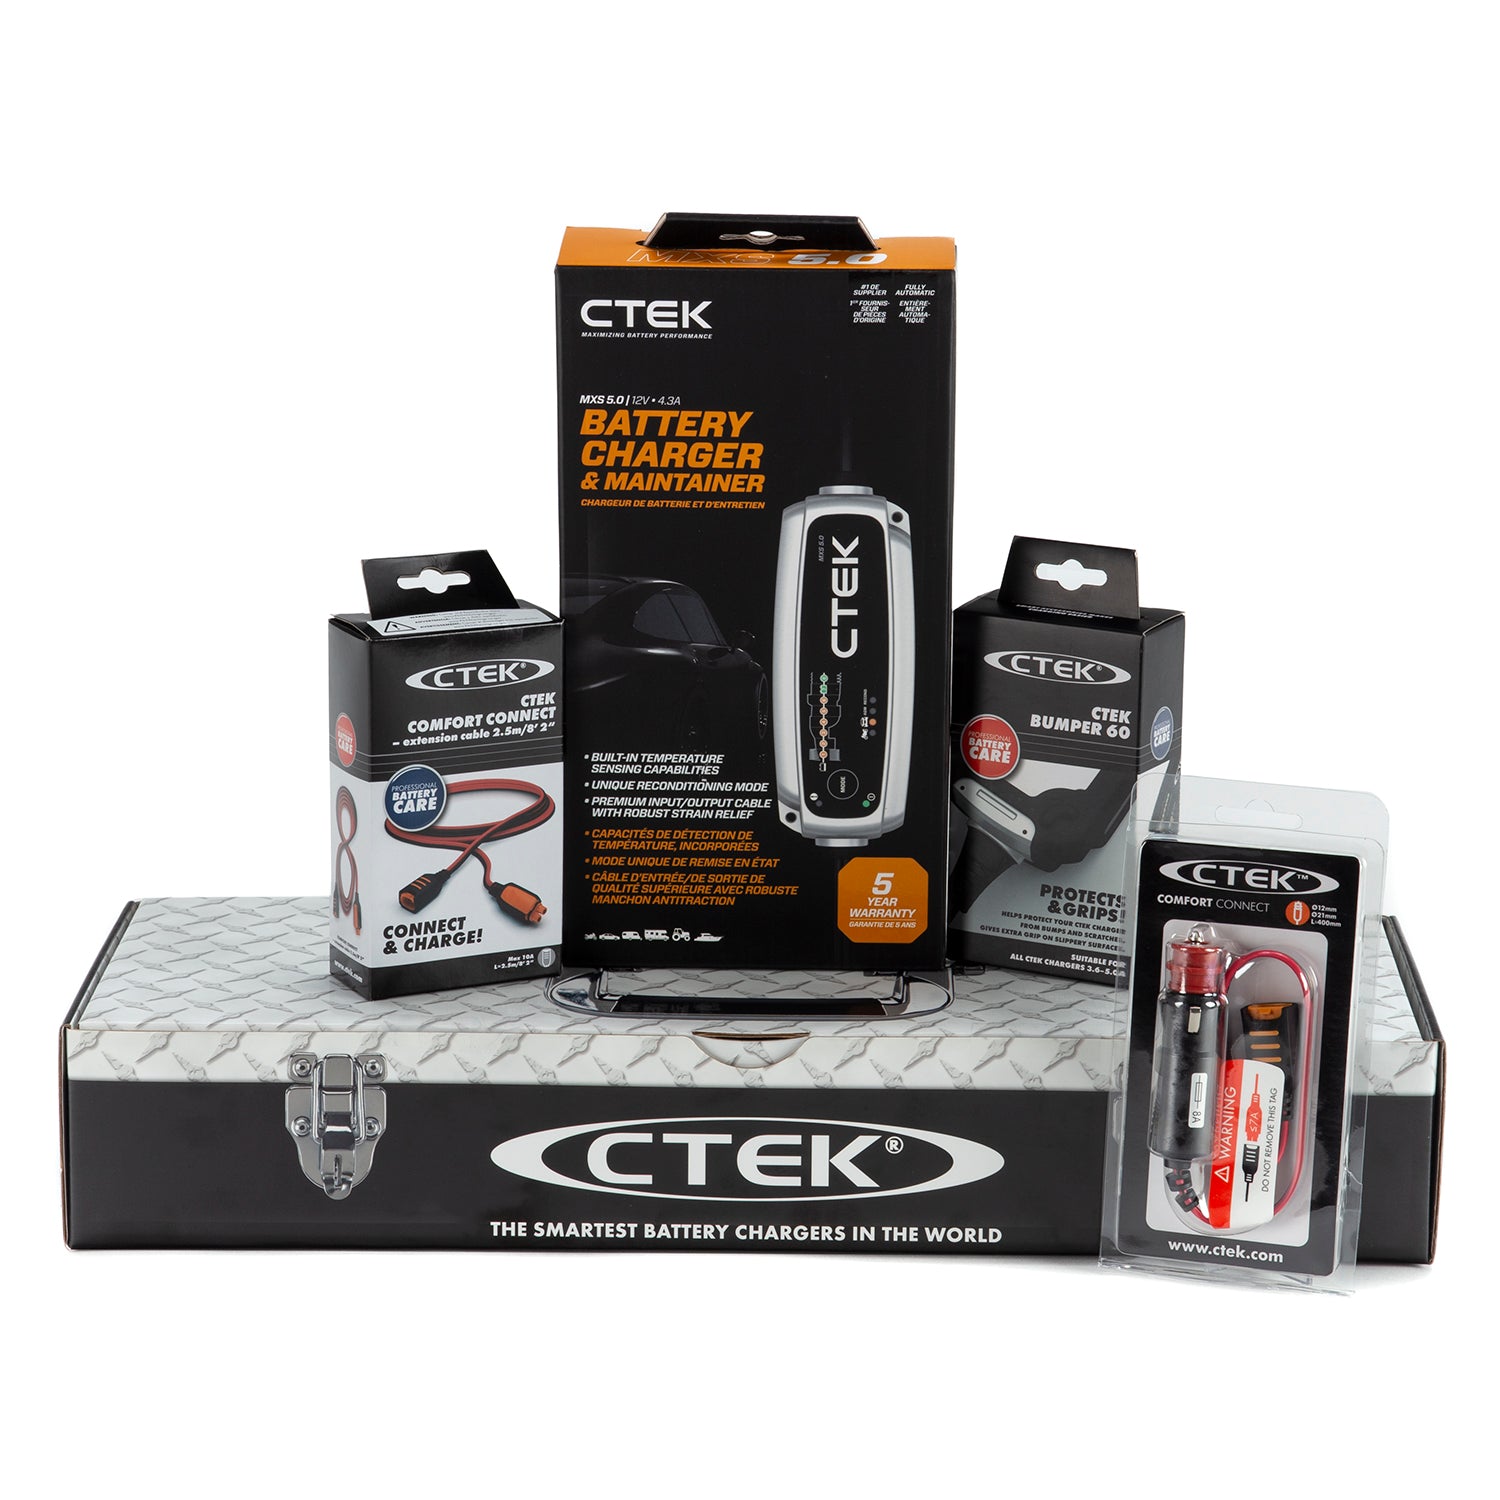 CTEK MXS 5.0 maintenance and charger - Now 22% Savings